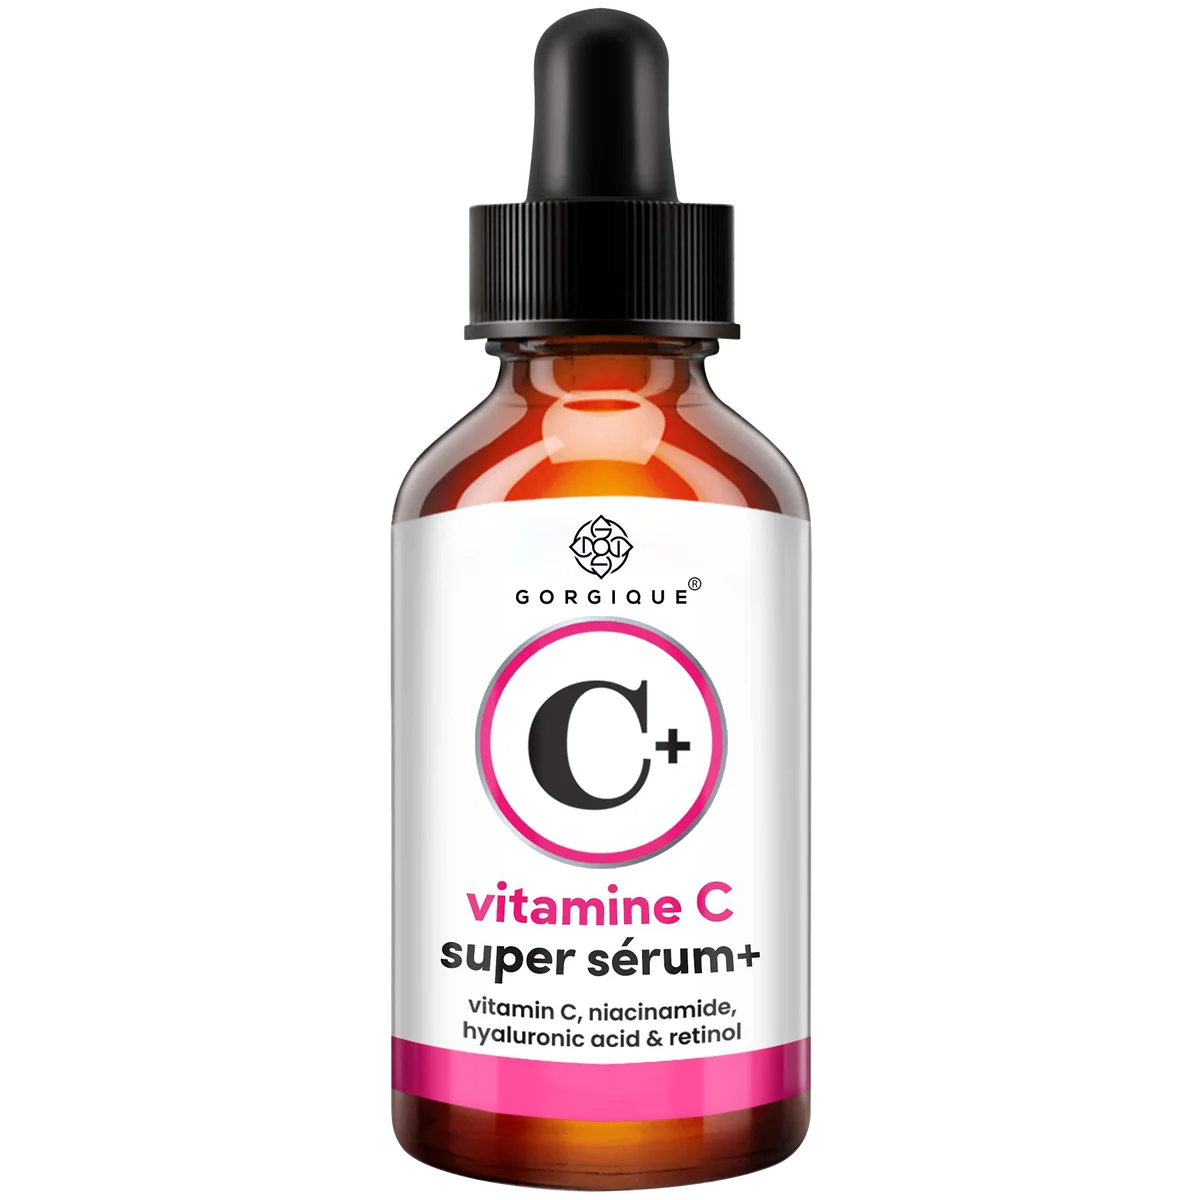 

GORGIQUE Vitamin C-Plus Super Anti Aging Anti-Wrinkle Facial Serum with Niacinamide, Retinol,Hyaluronic Acid, and Salicylic Acid